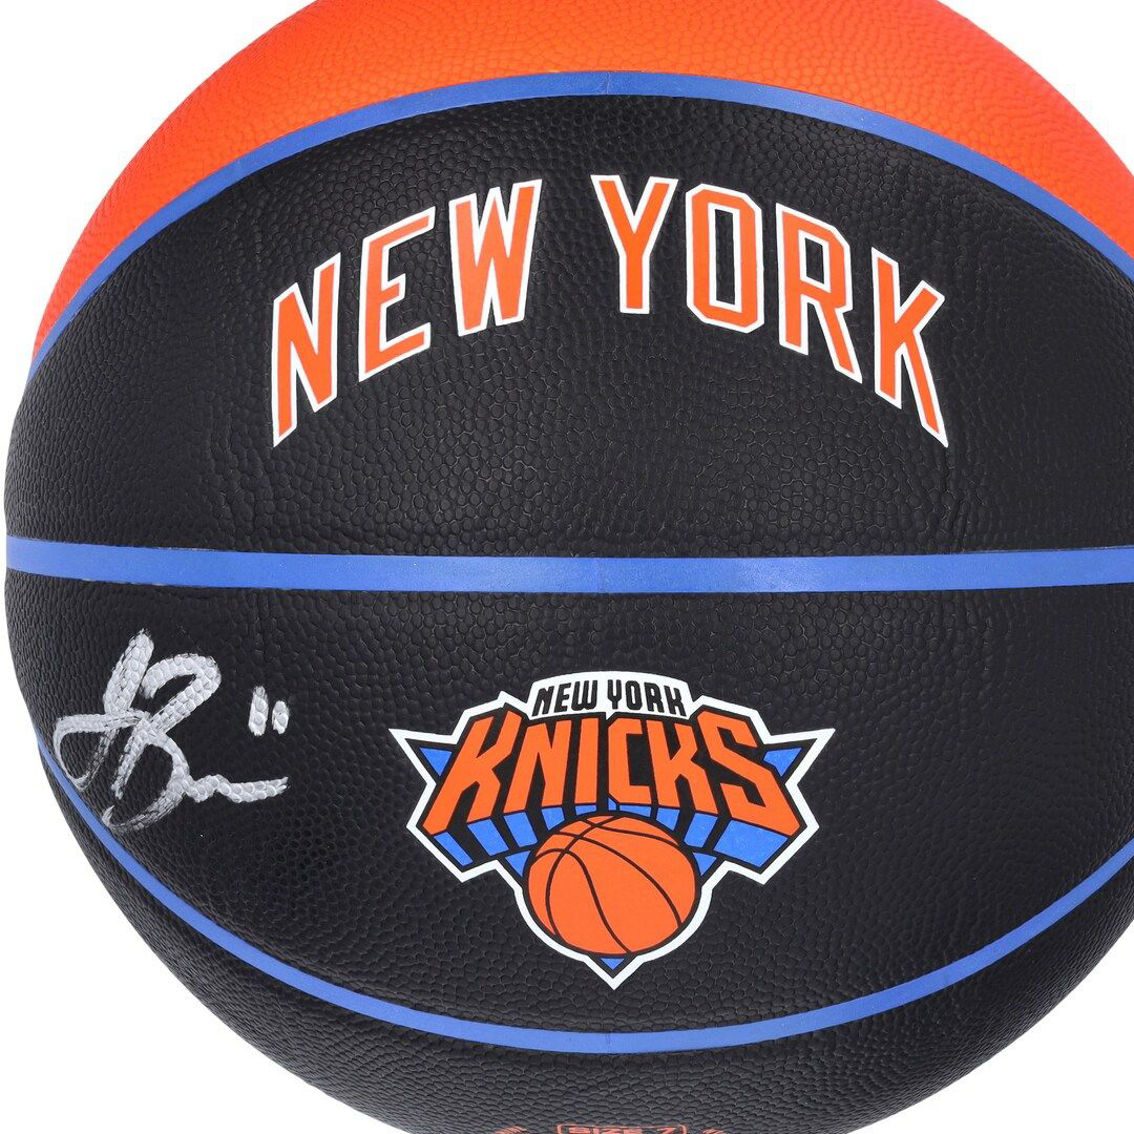 Fanatics Authentic Jalen Brunson New York Knicks Autographed Wilson City Edition Collectors Basketball - Image 3 of 4